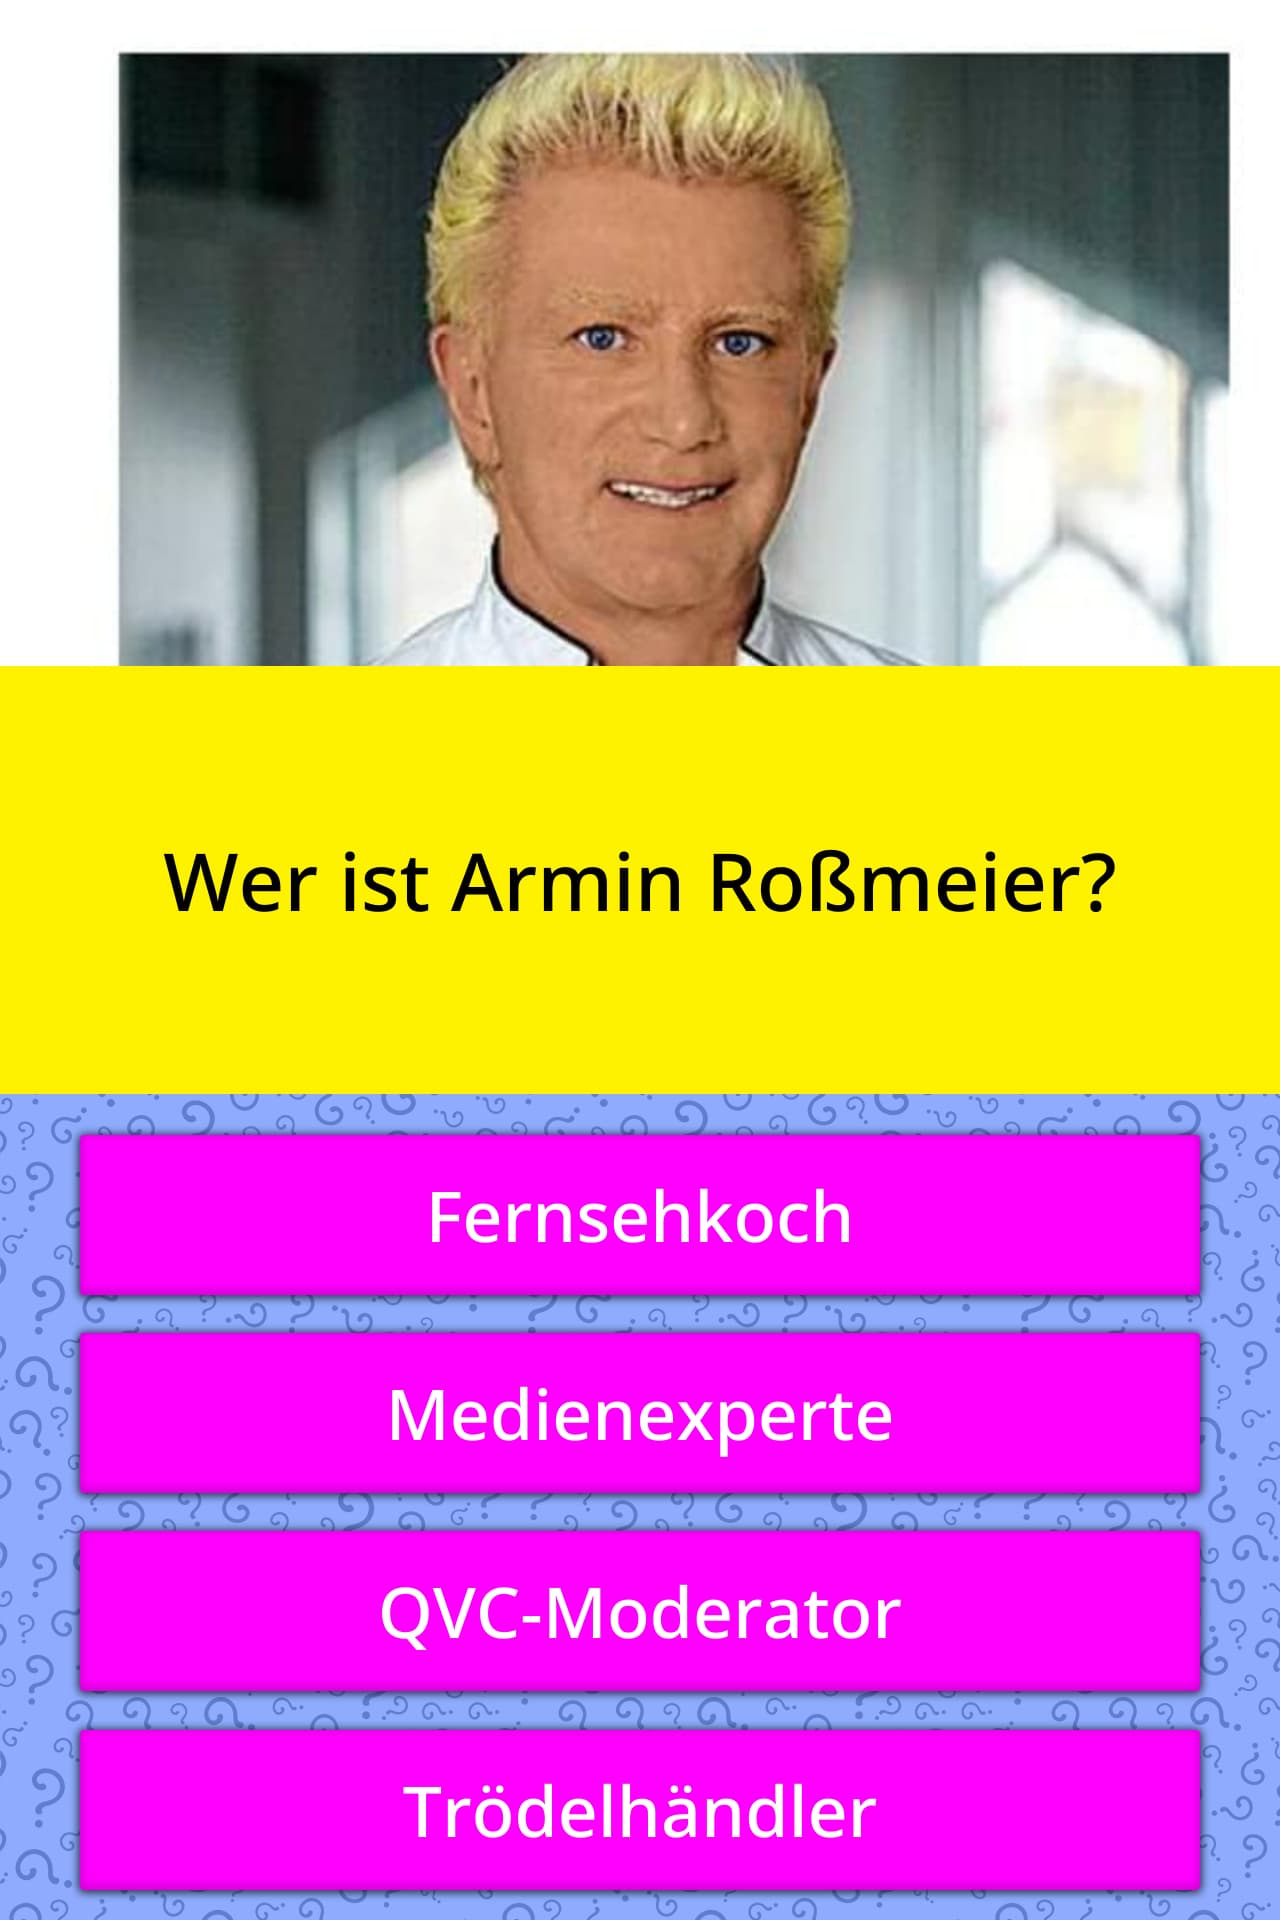 Roßmeier ist schwul armin Armin Roßmeier